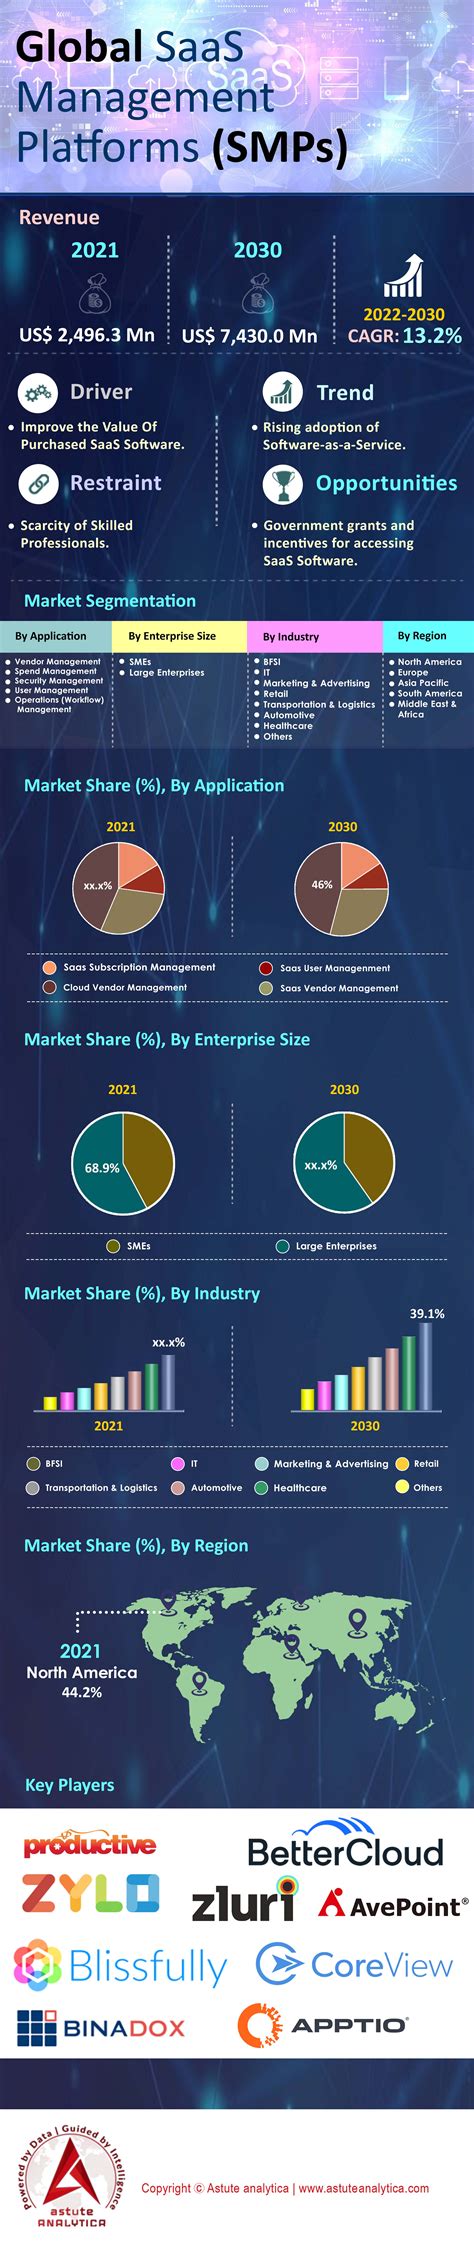 Saas management platform market size. Things To Know About Saas management platform market size. 